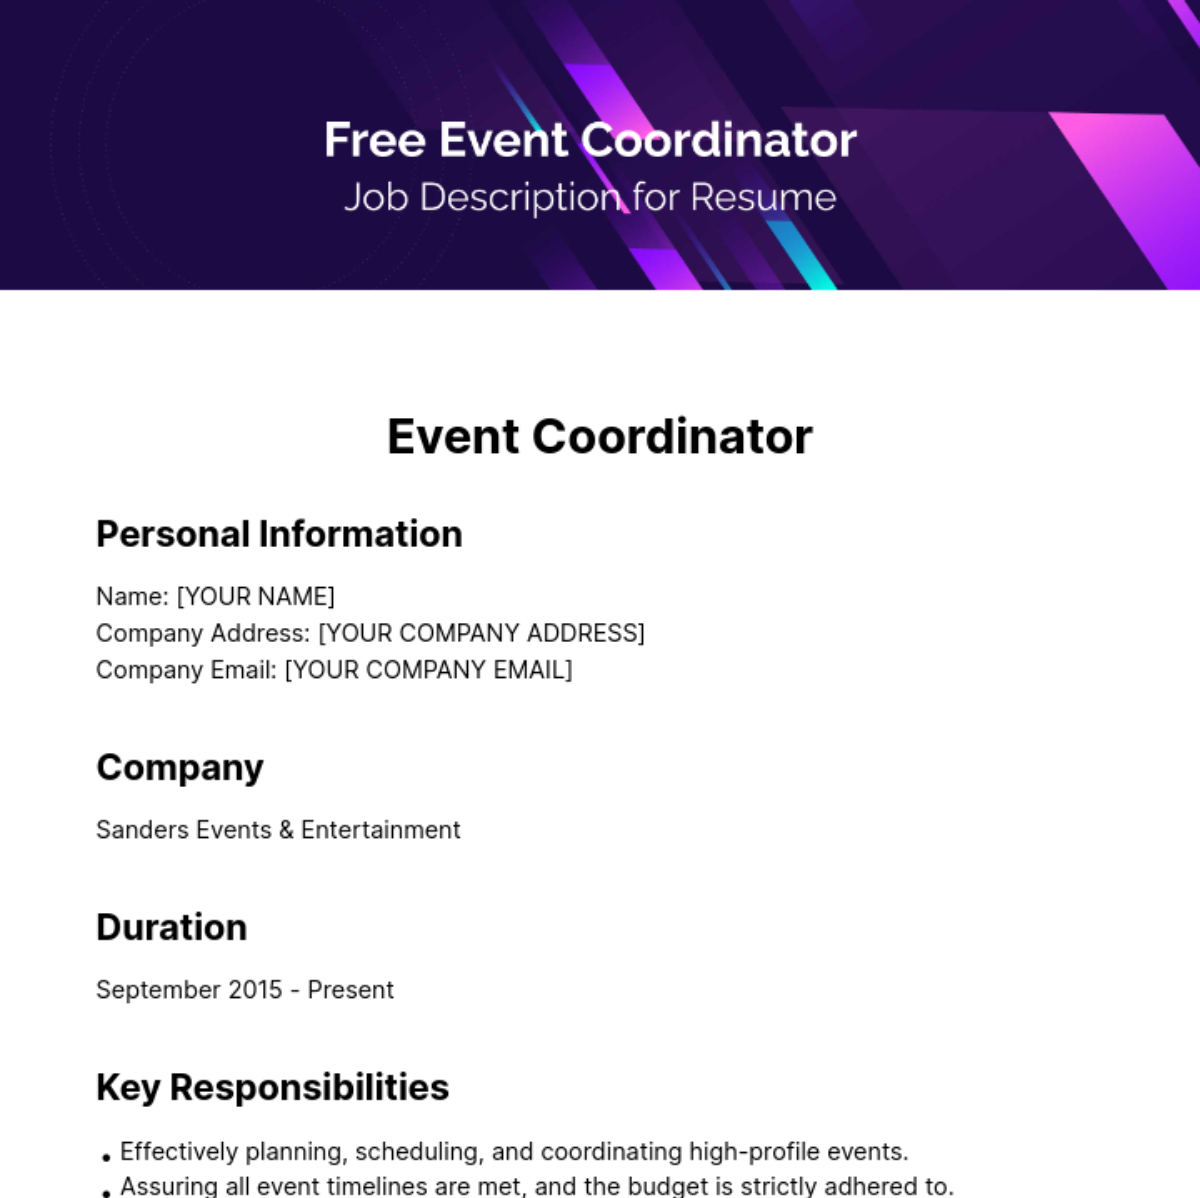 Free Event Coordinator Job Description for Resume Template